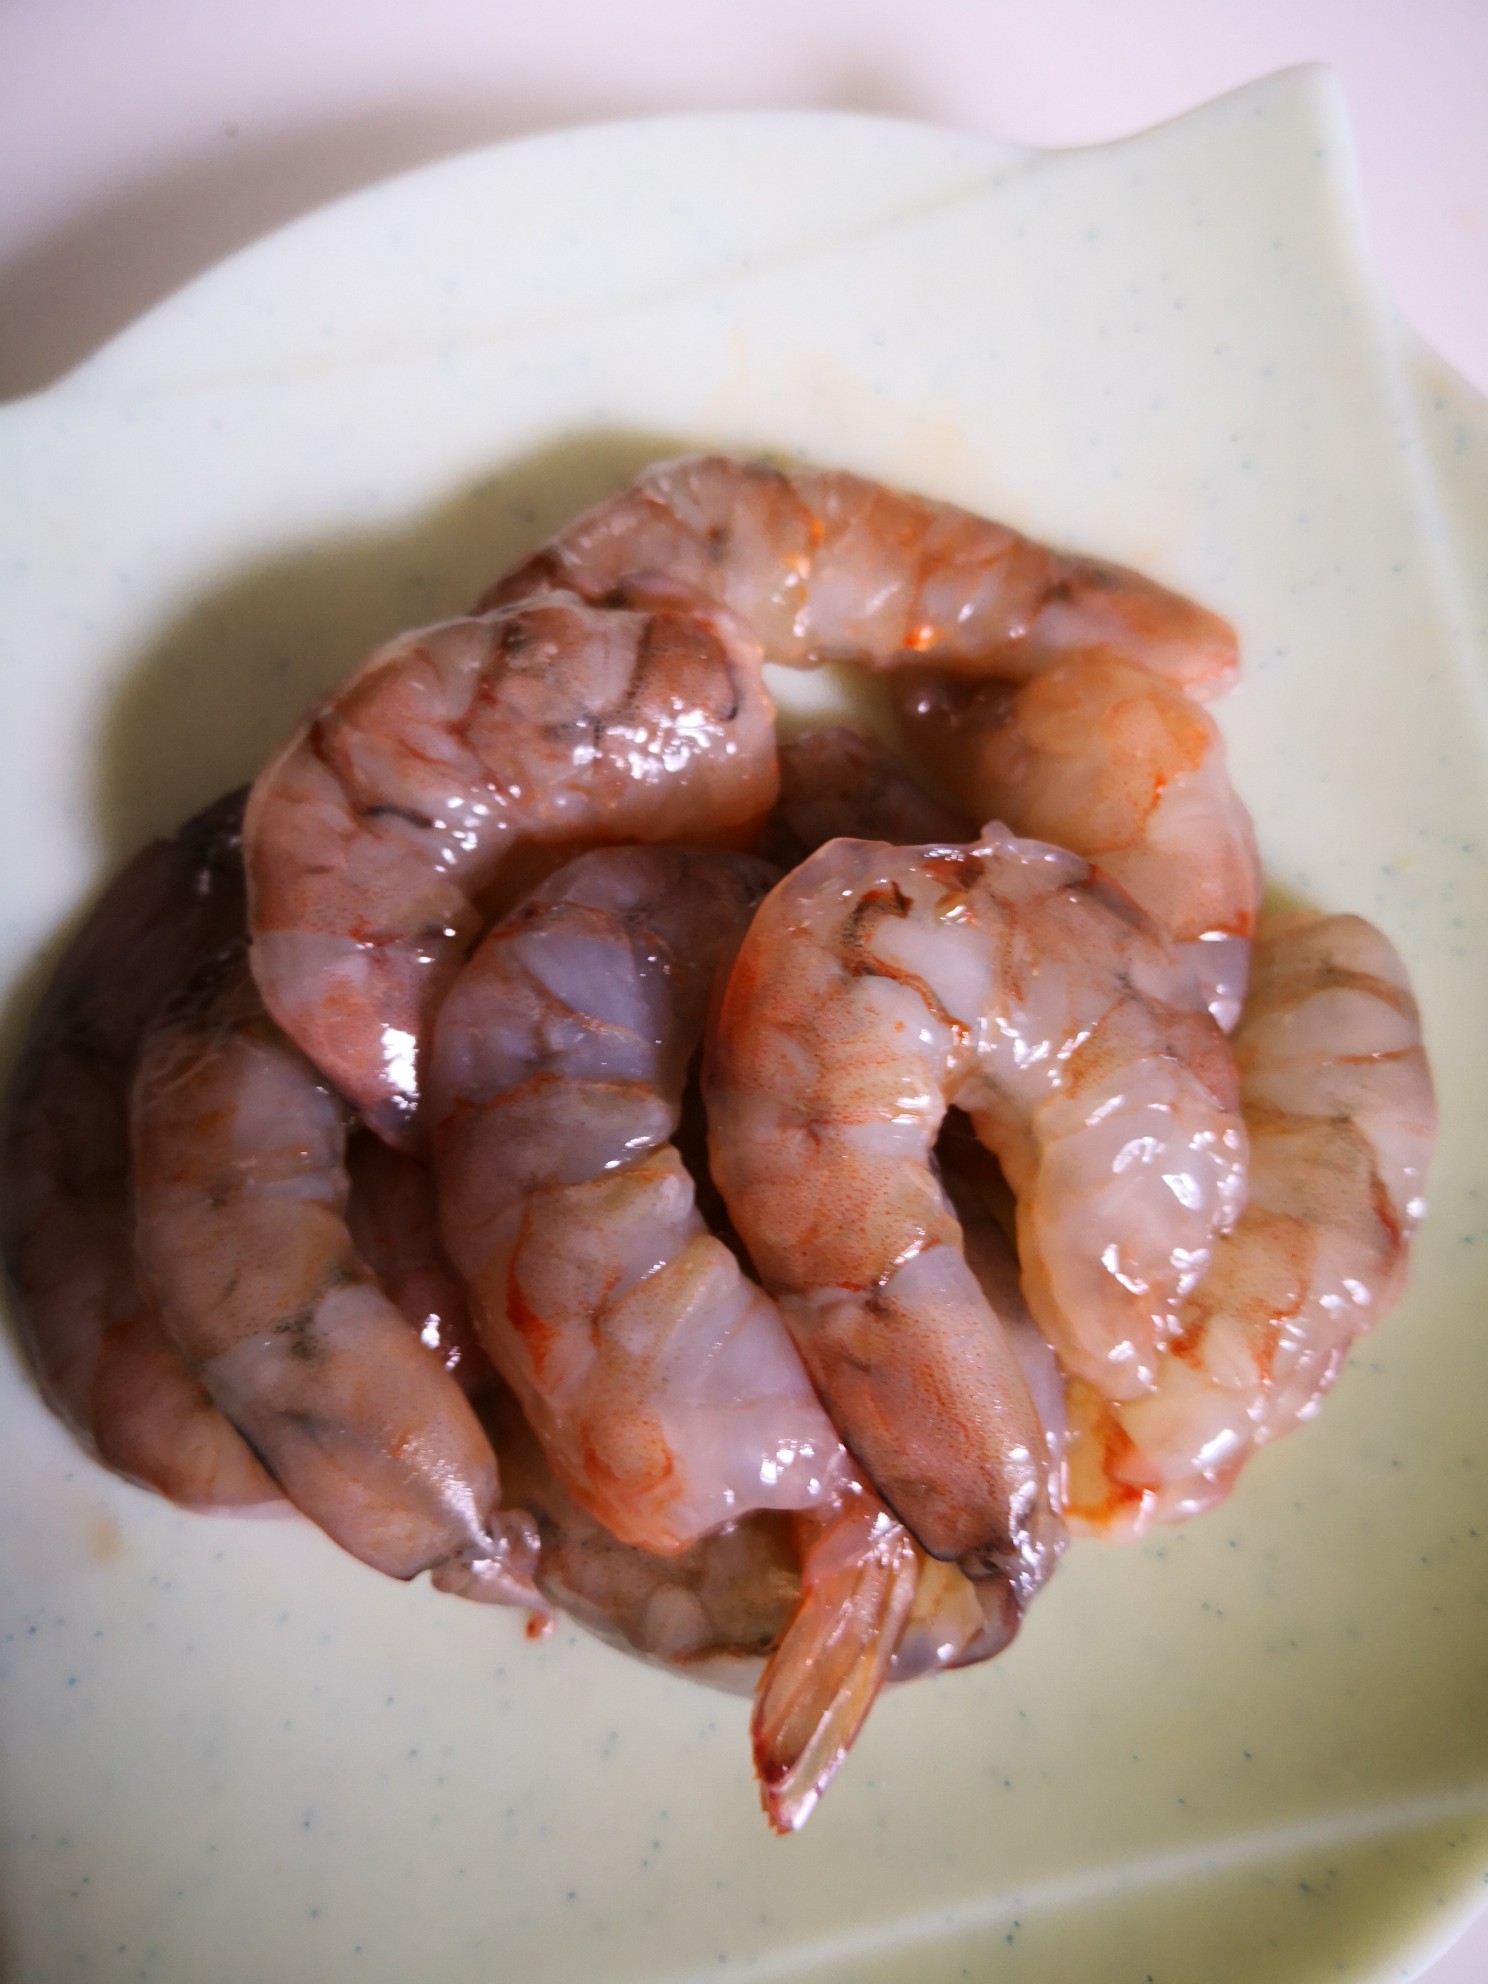 Shrimp Meatball Soup recipe